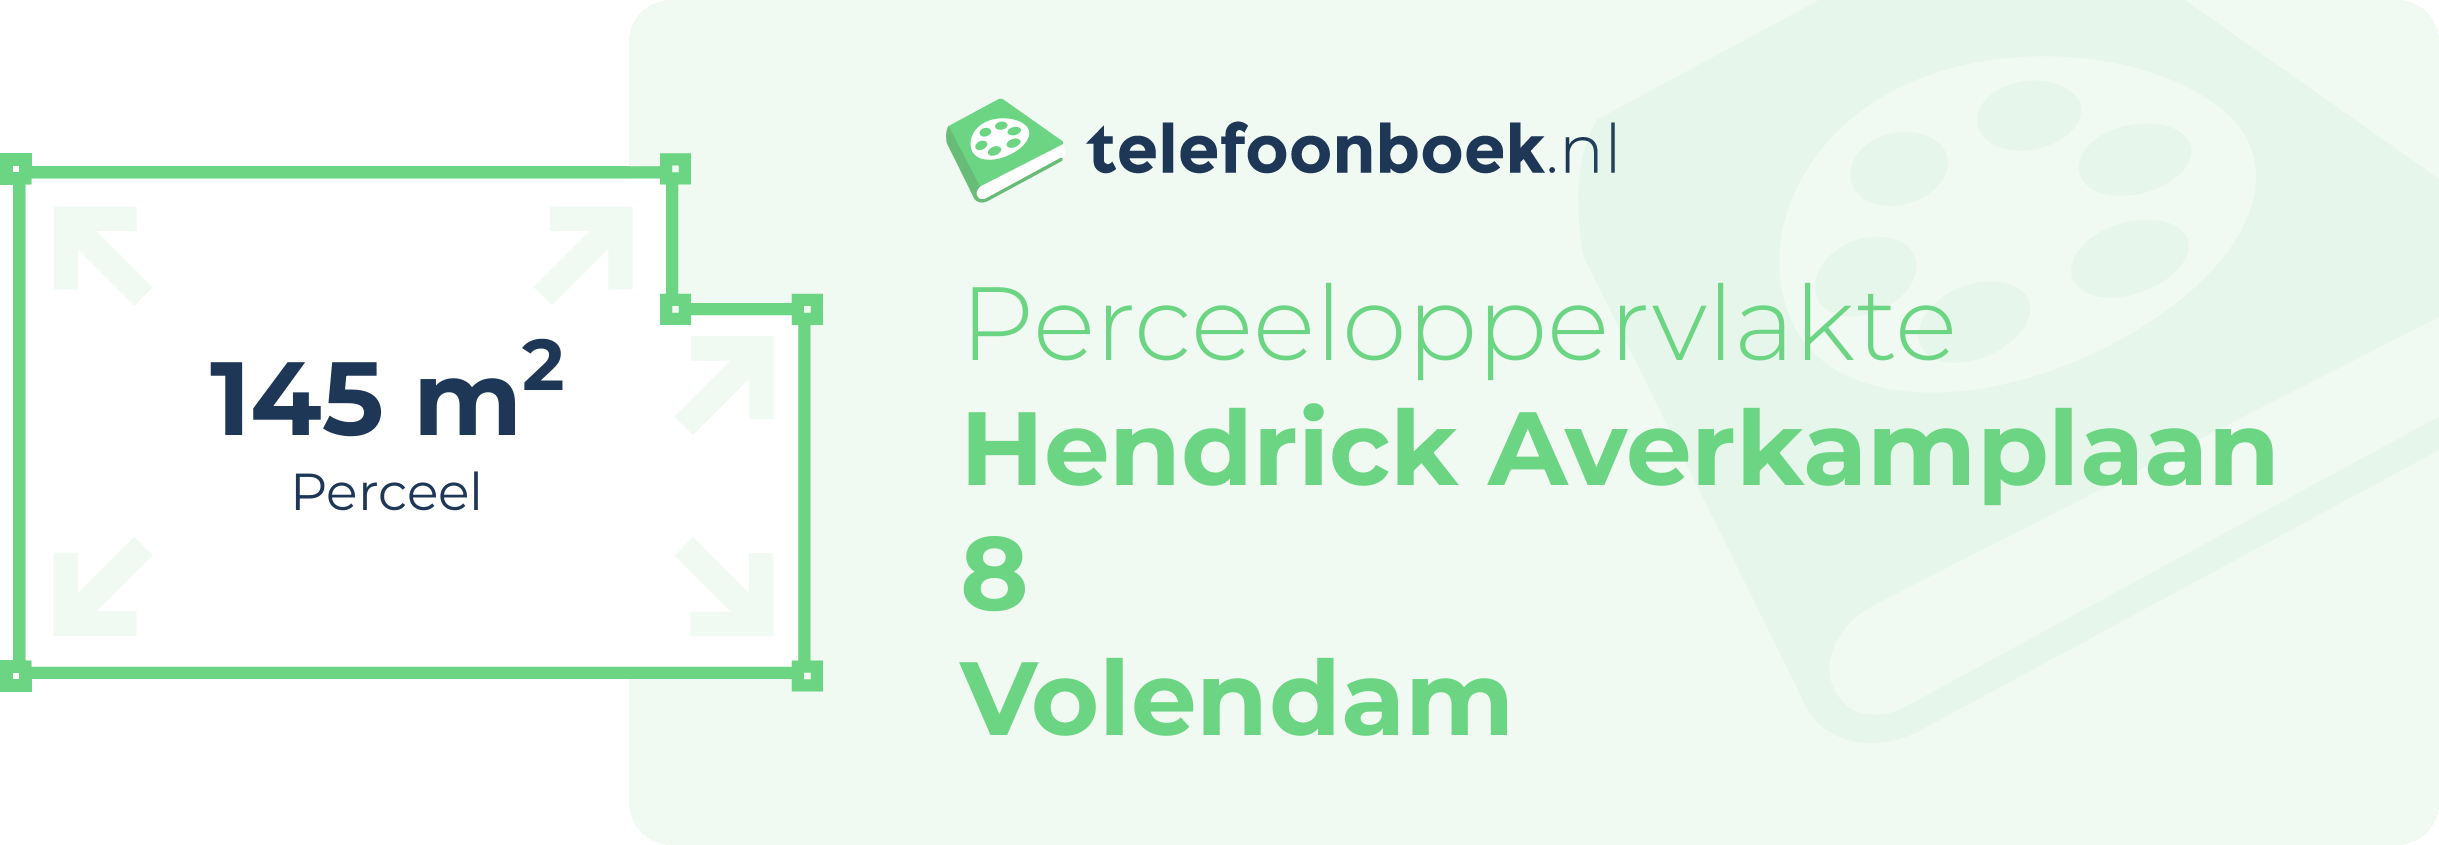 Perceeloppervlakte Hendrick Averkamplaan 8 Volendam